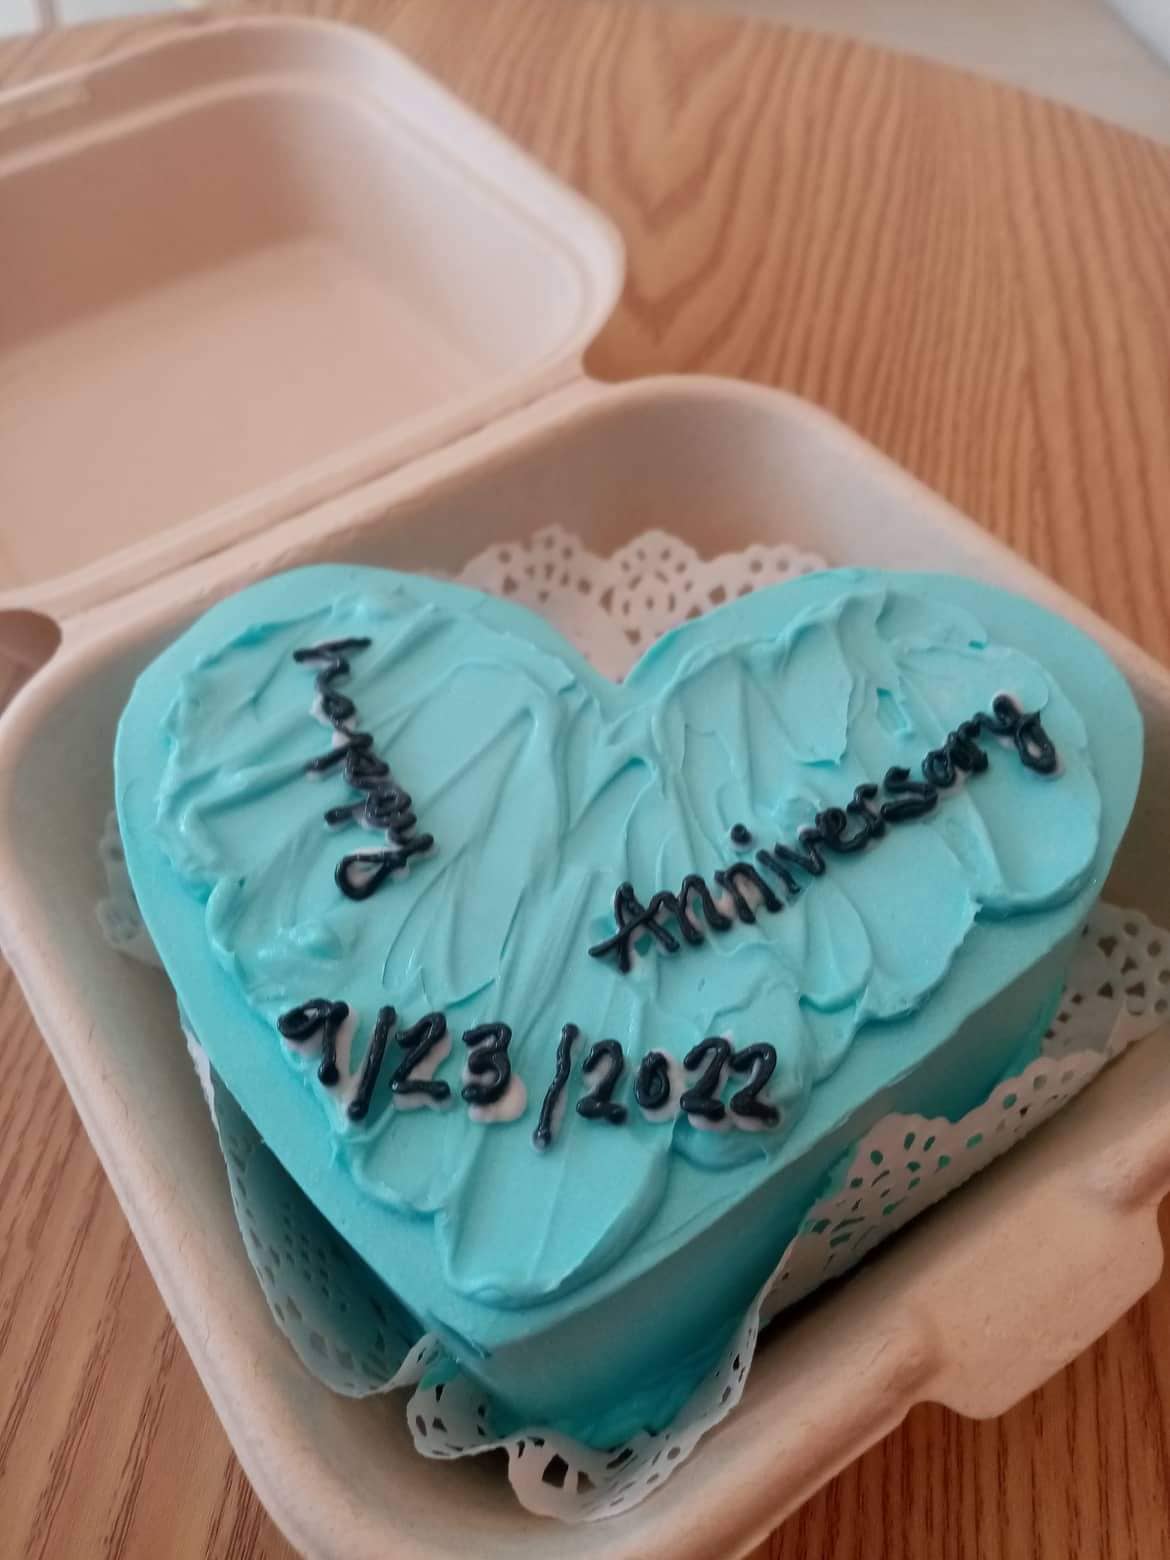 Happy 2nd Anniversary ♥️♥️ Cake size : 4 by 3 #minimalistcakeph | Instagram